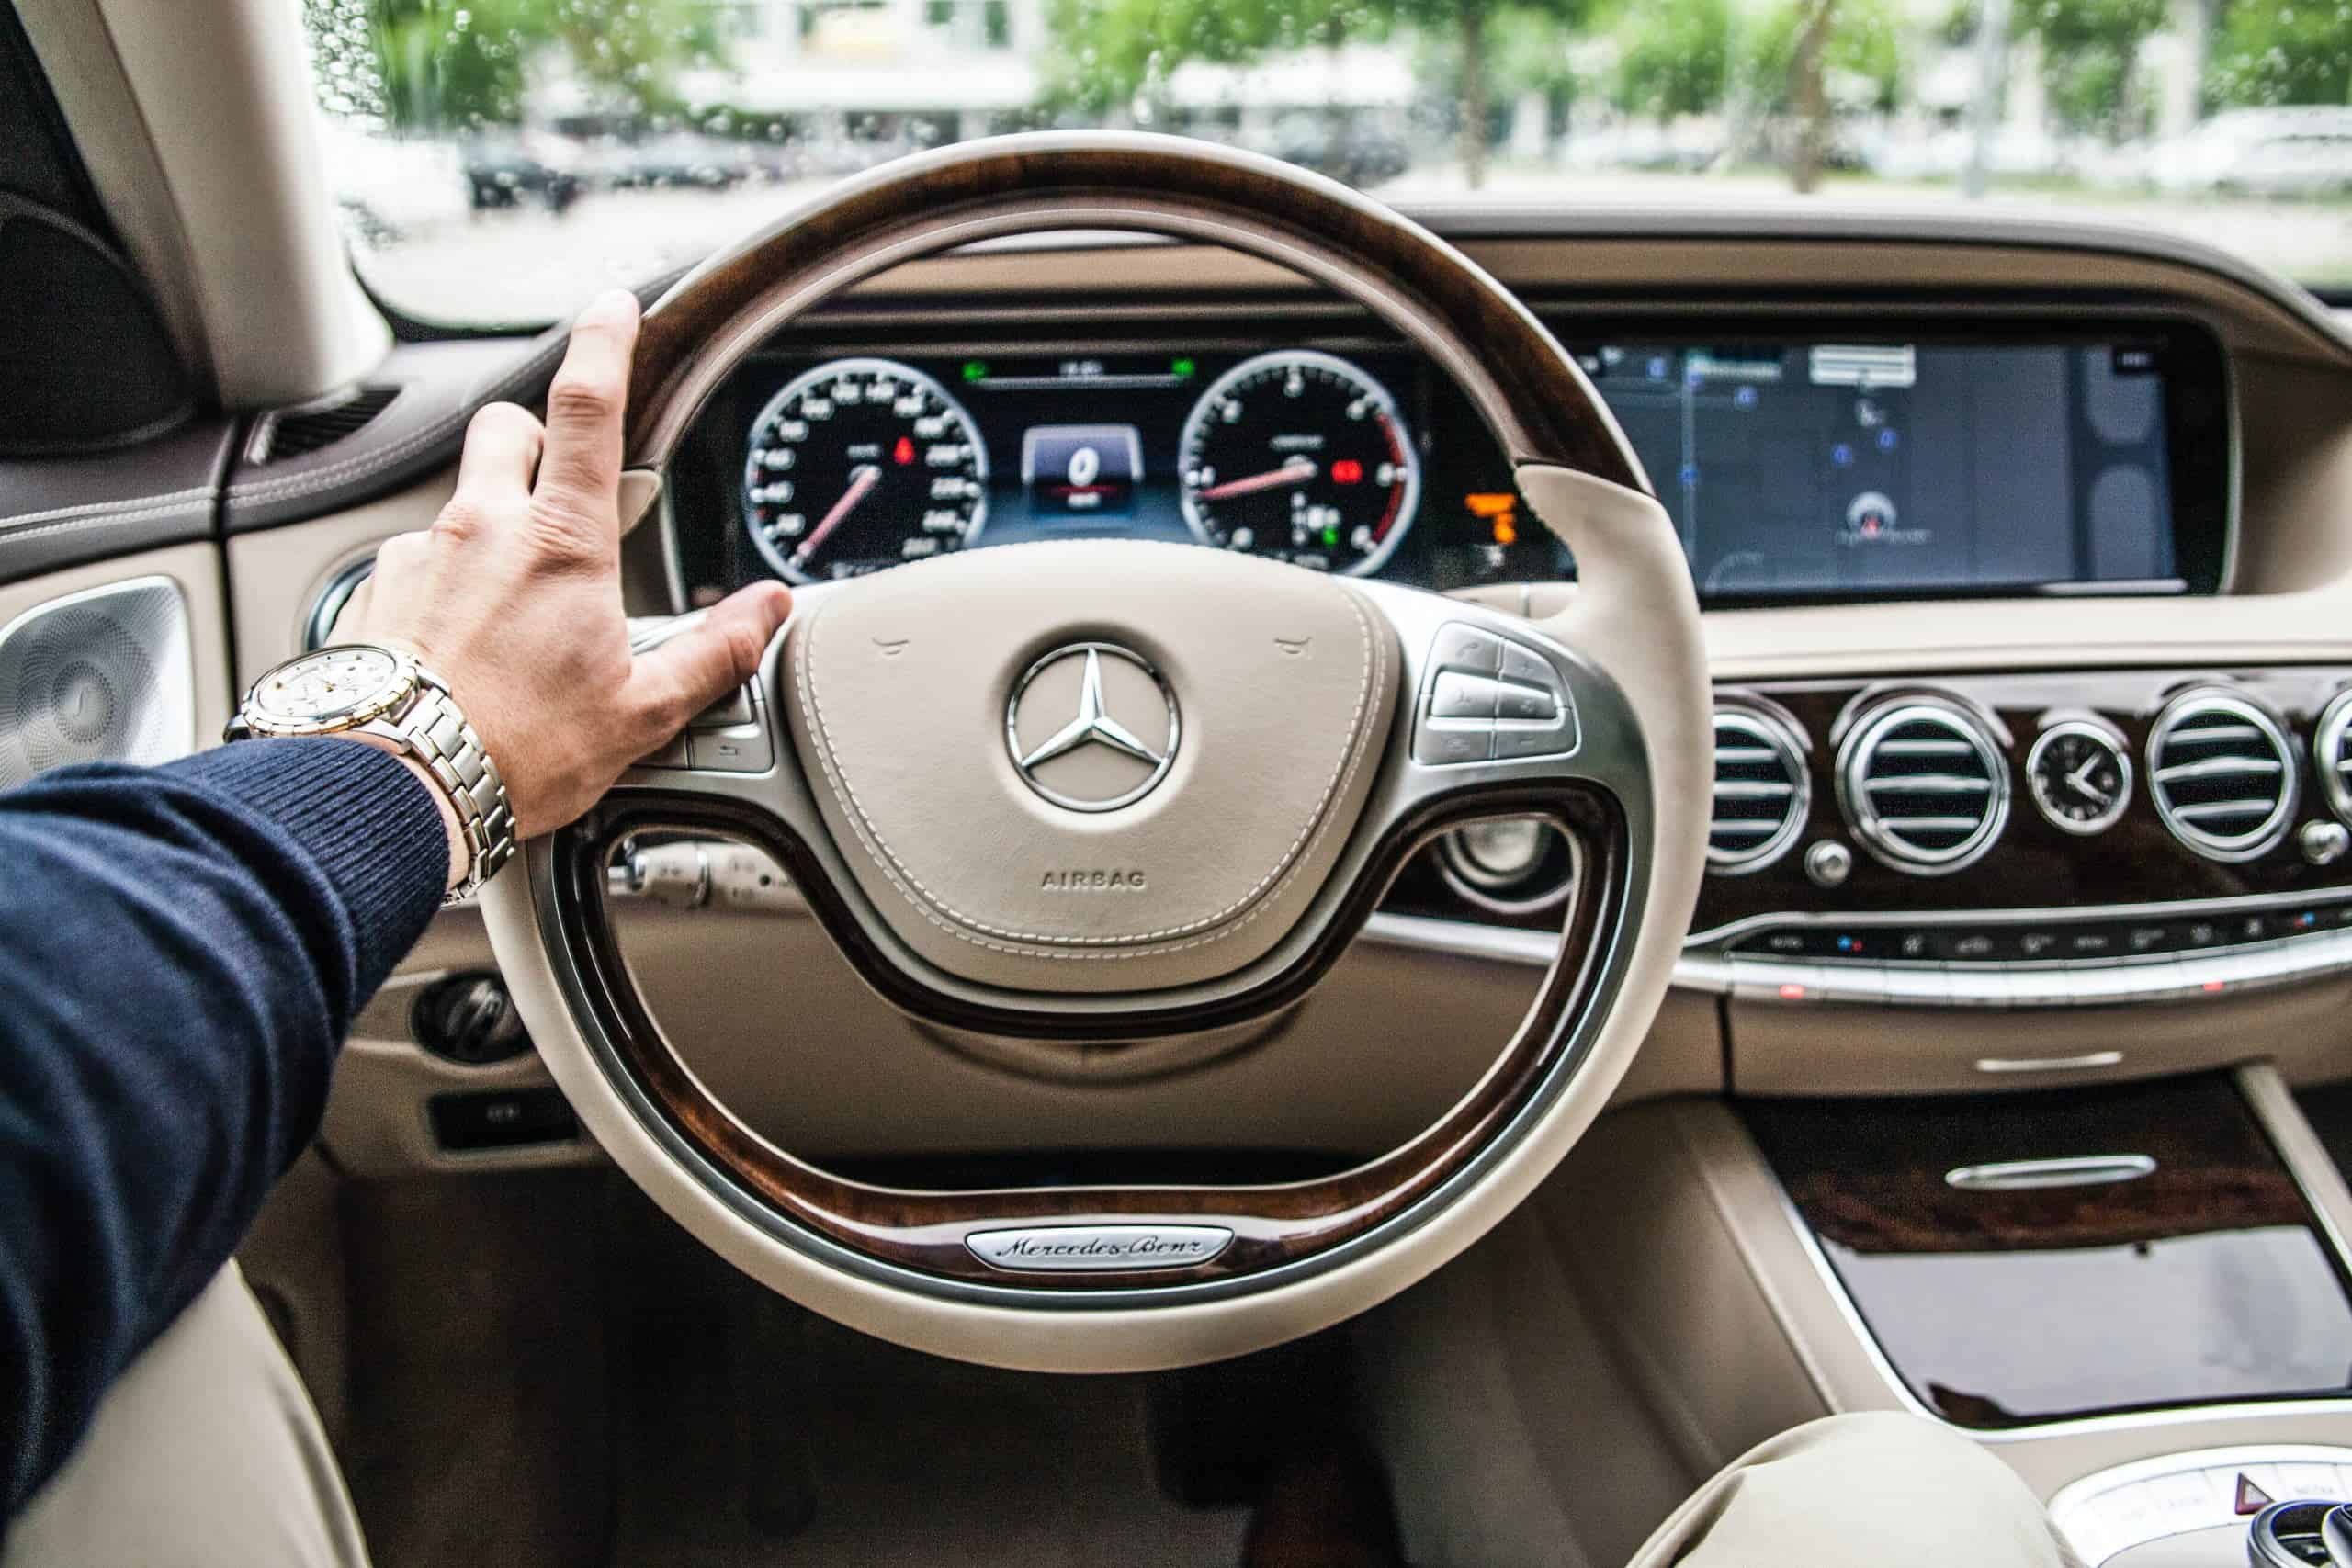 Luxury Interior of Mercedes Limousine